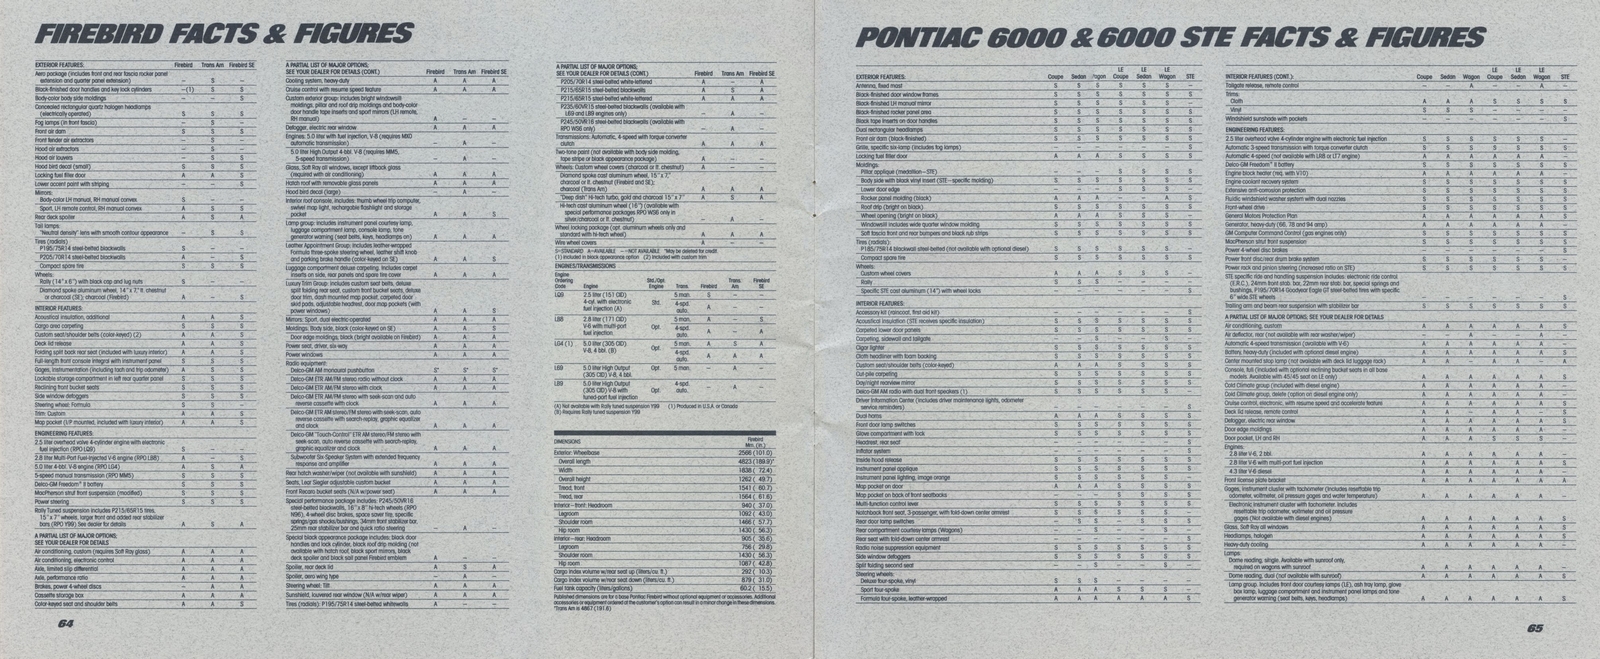 n_1985 Pontiac Full Line Prestige-64-65.jpg